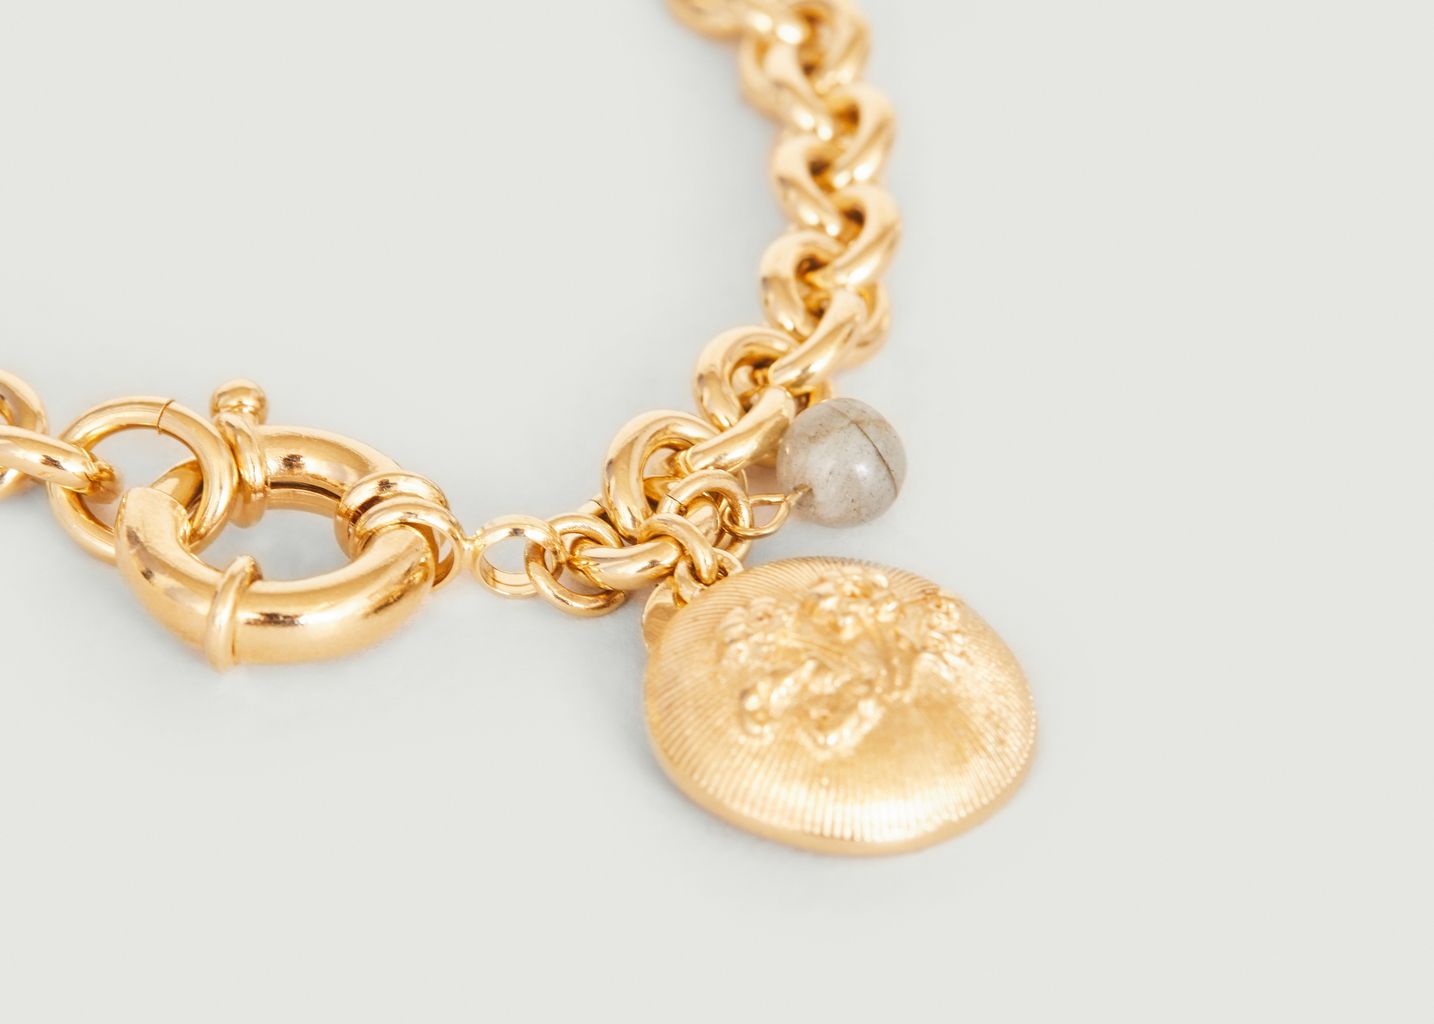 Denise chain bracelet with pendant - Louise Damas